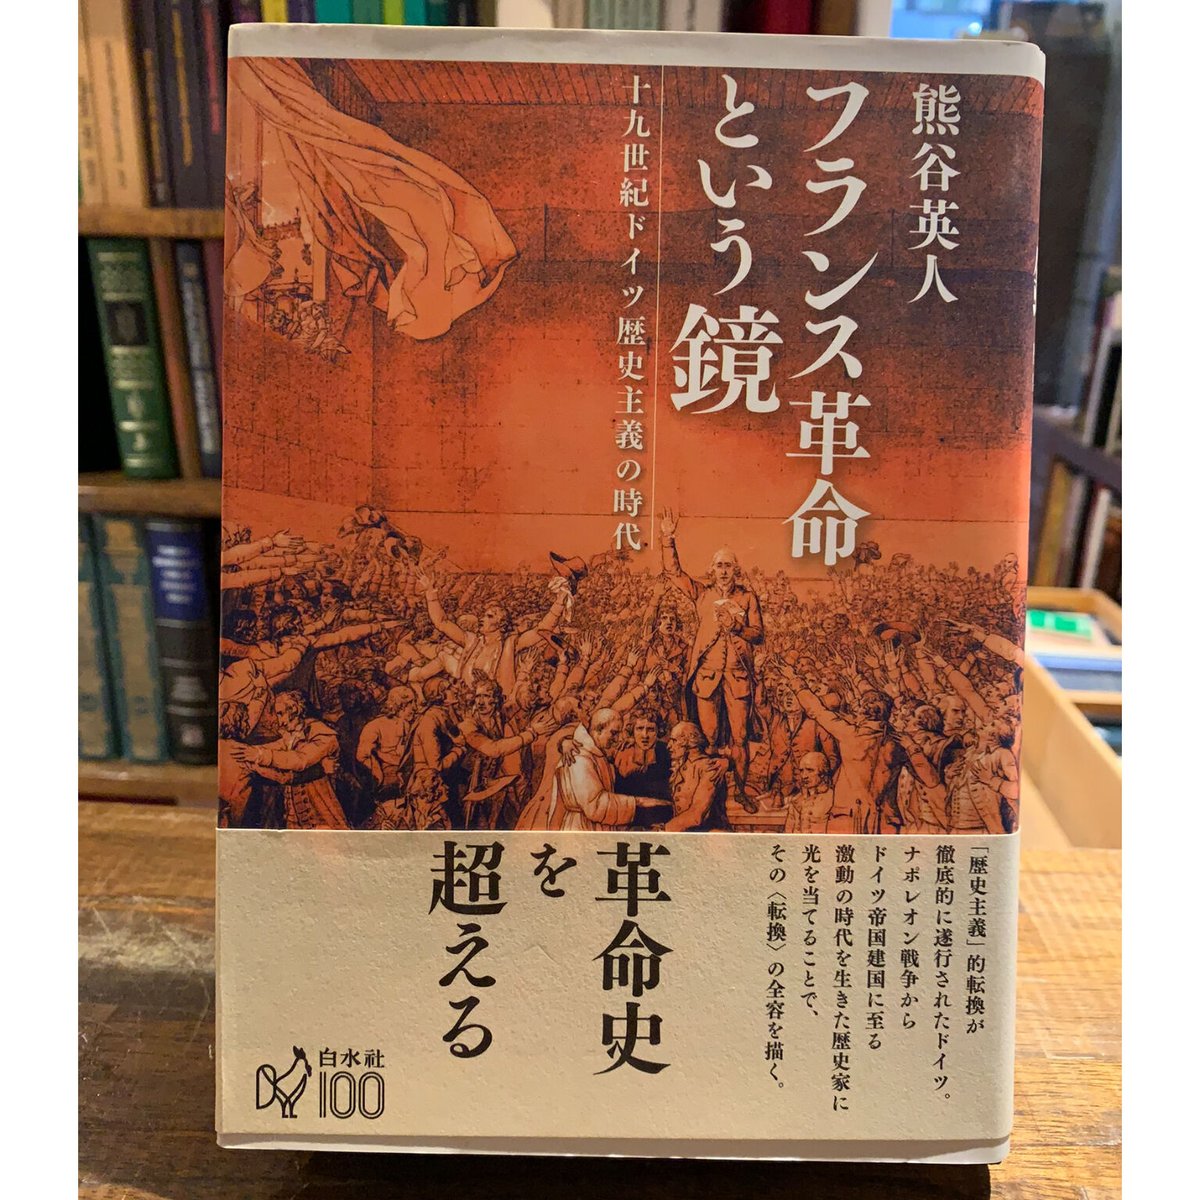 Mikazuki　フランス革命という鏡　Books　熊谷英人　三日月書店